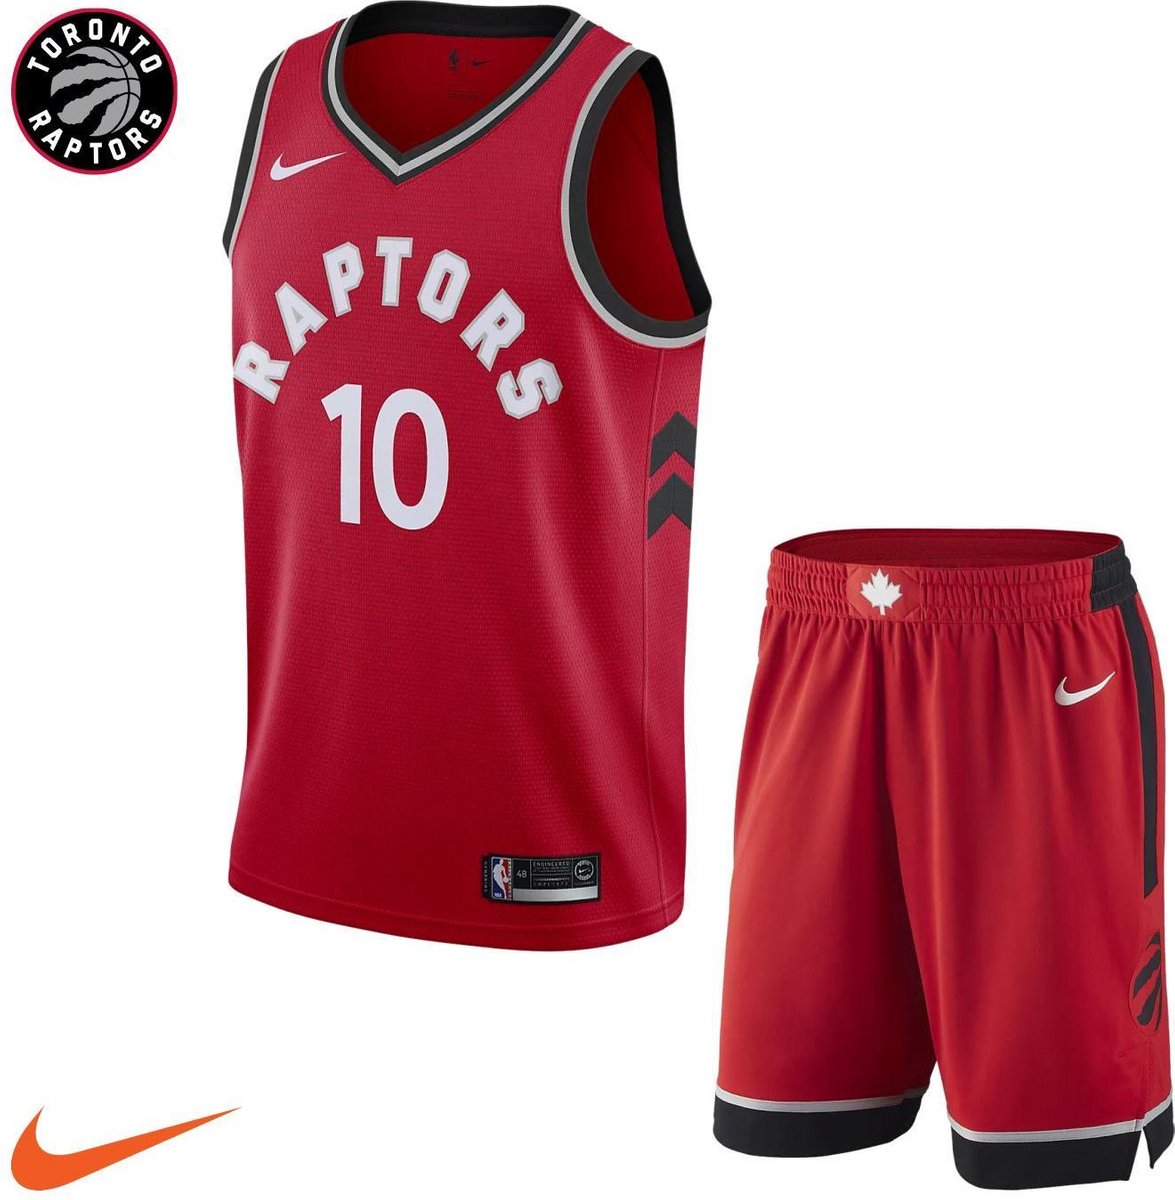 Verlichting Inwoner Ga lekker liggen Nike Toronto Raptors - DeRozan (10) basketbal tenue - maat 140 | bol.com